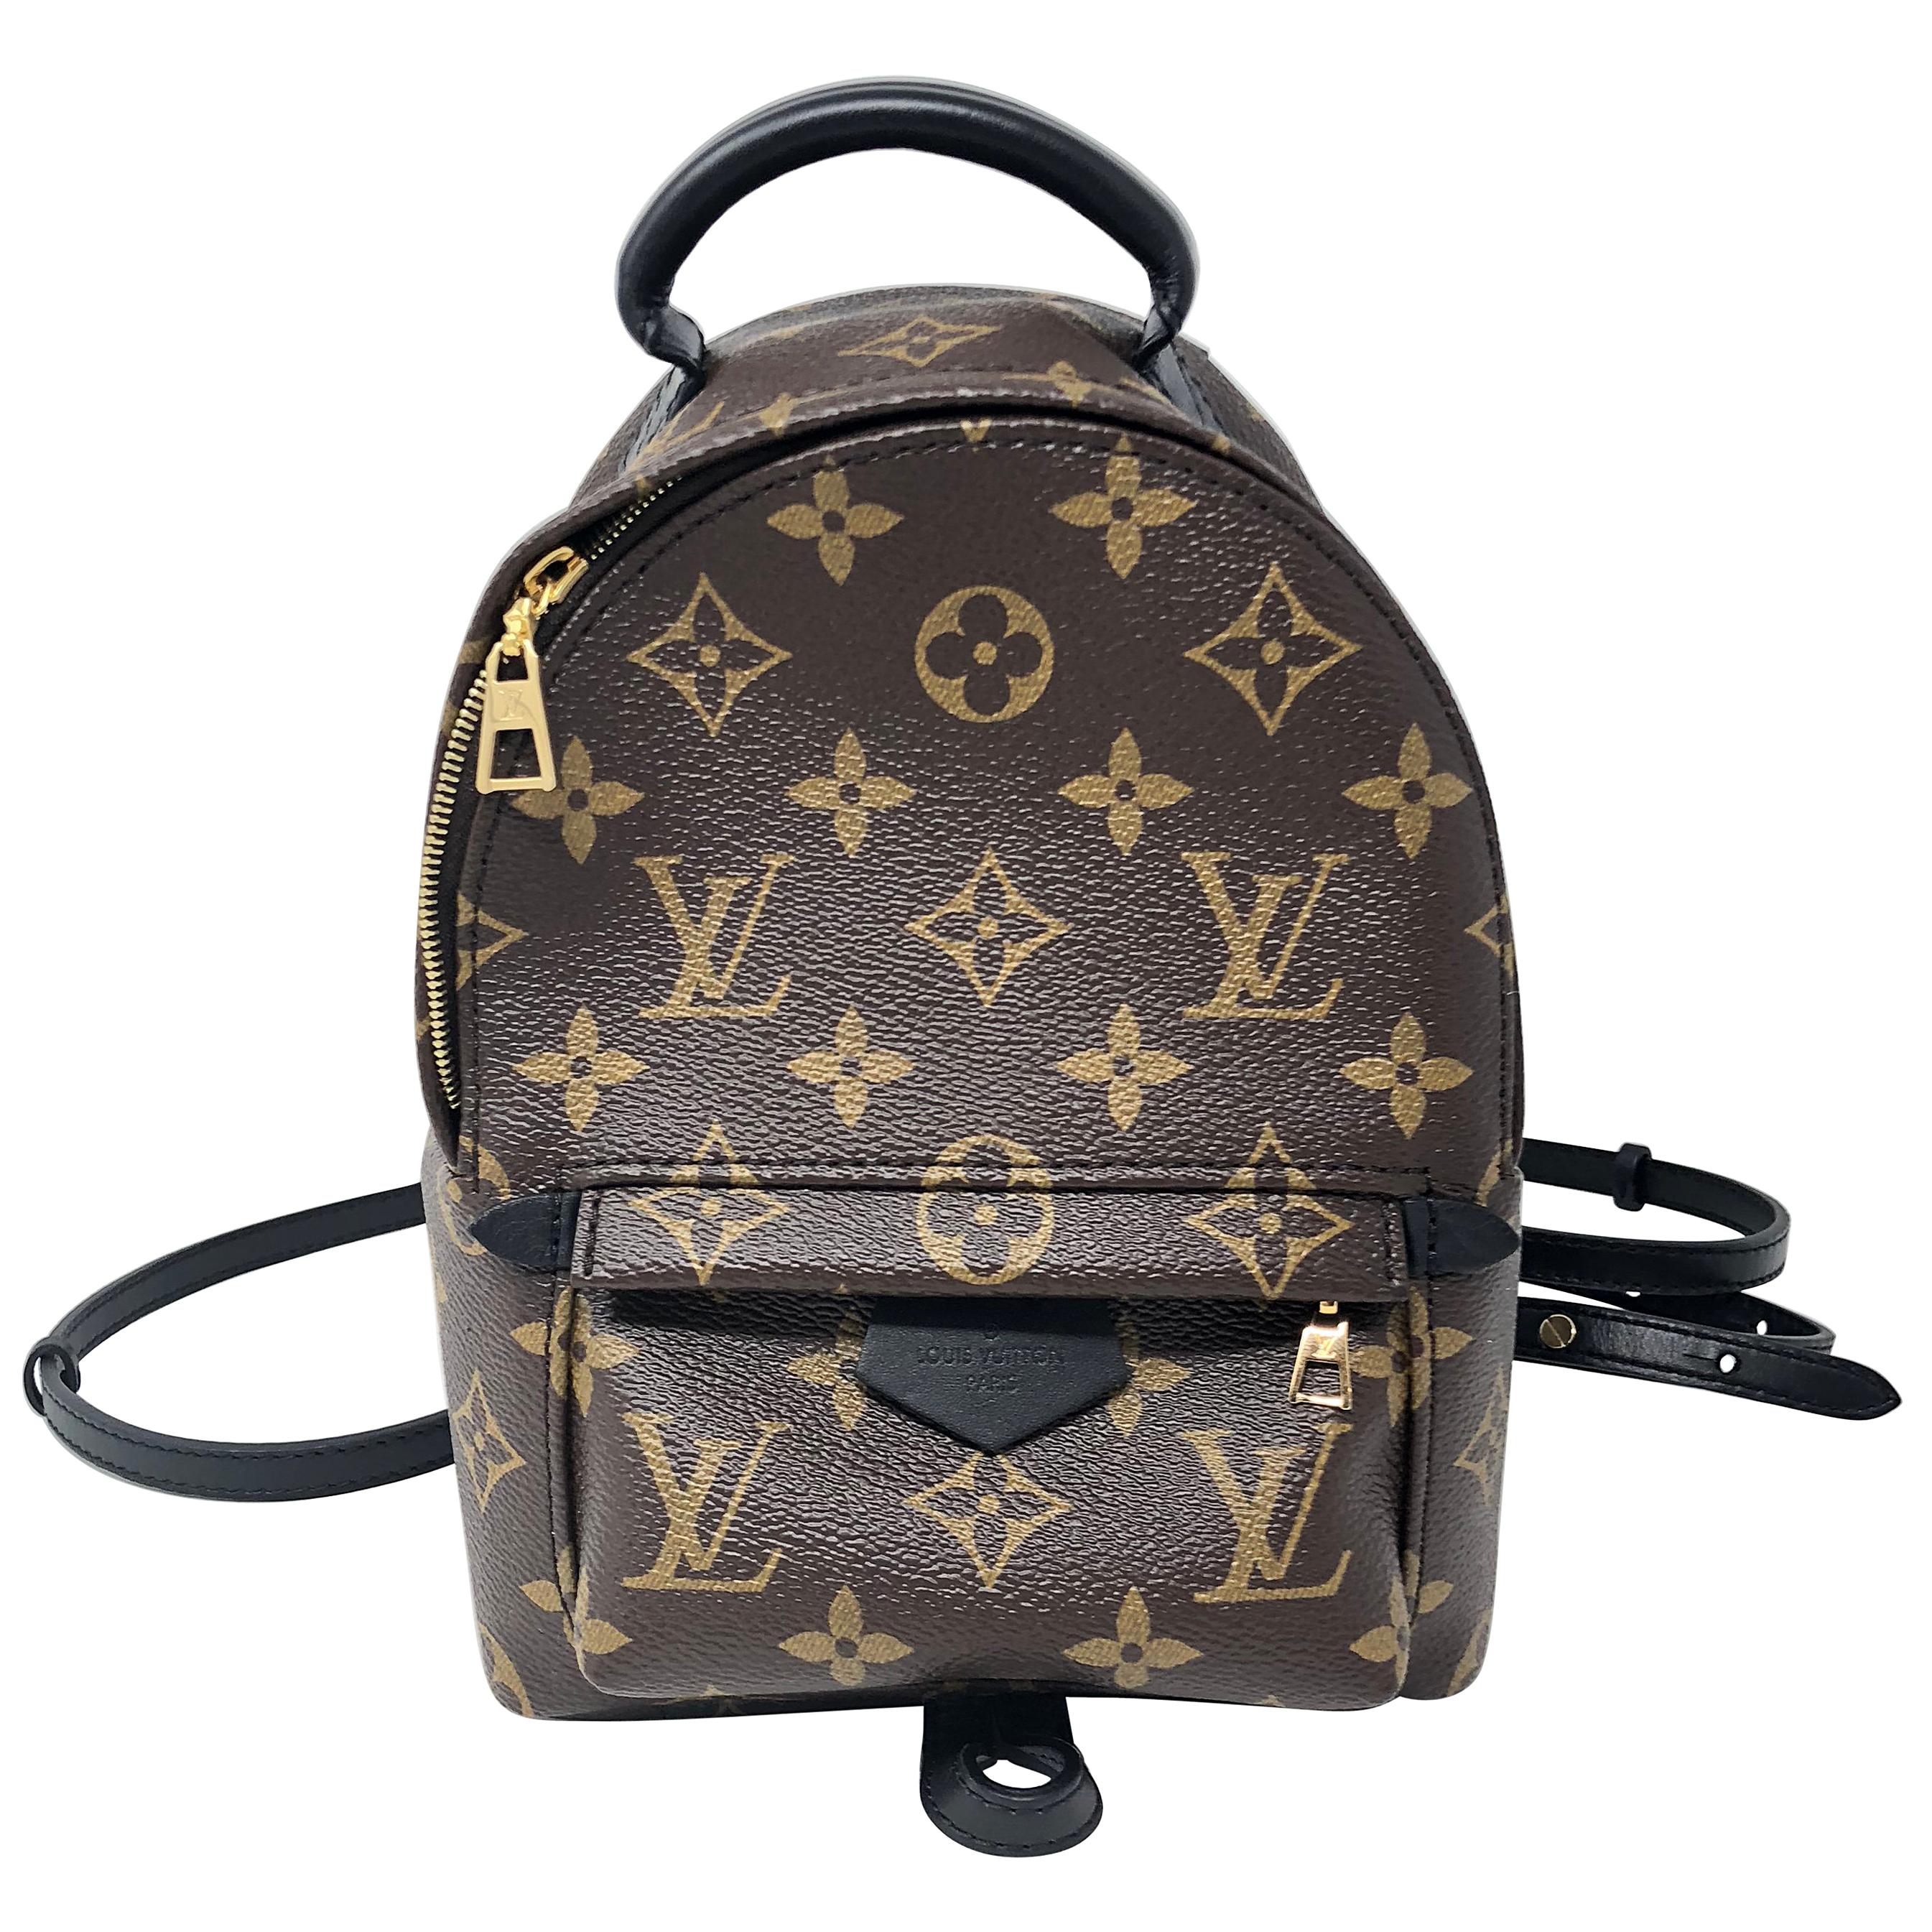 Louis Vuitton Palm Springs Mini Backpack 